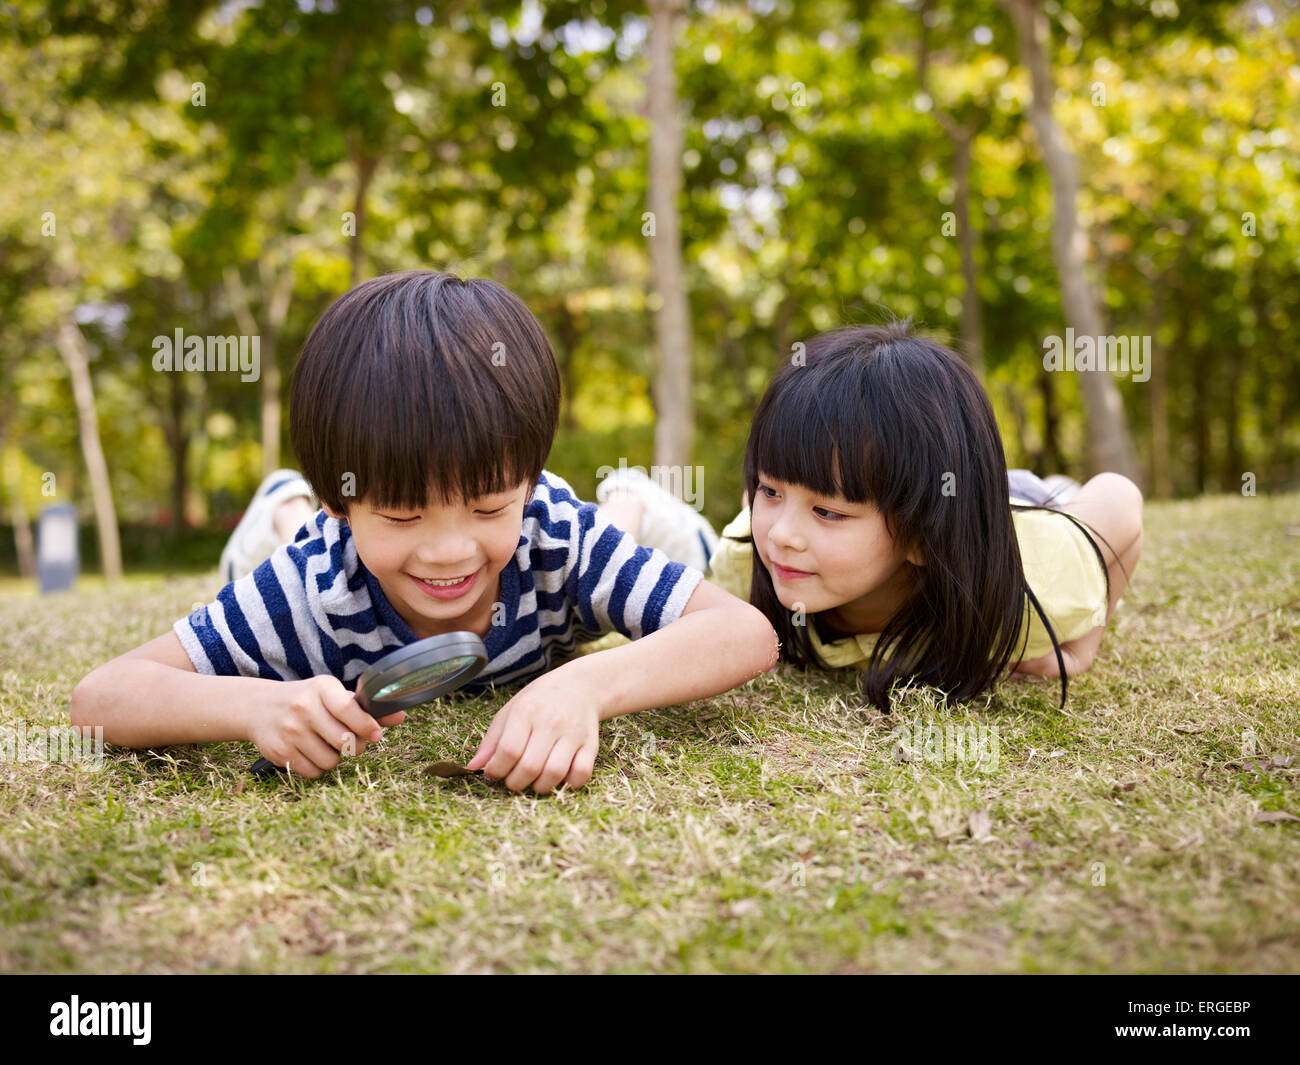 children in nature Stock Photo